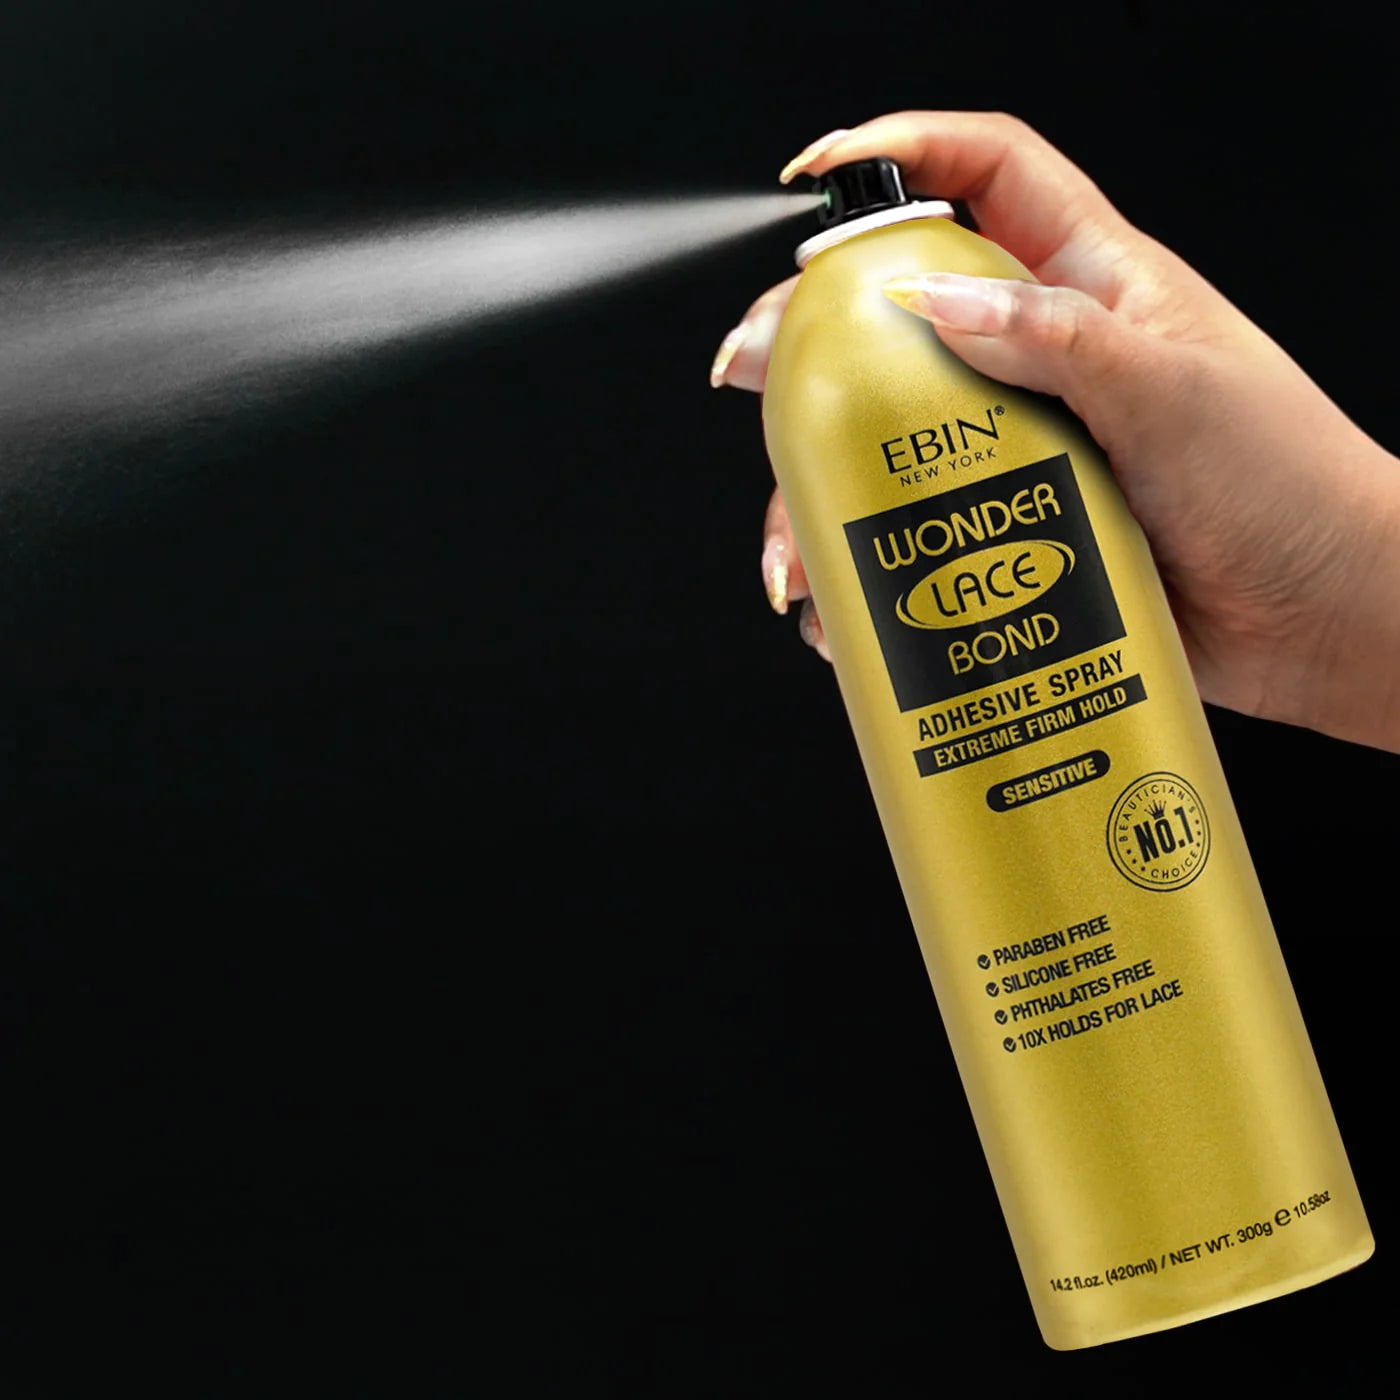 Ebin - Wonder Lace Bond Adhesive Spray Extreme Firm Hold Supreme 2.7oz